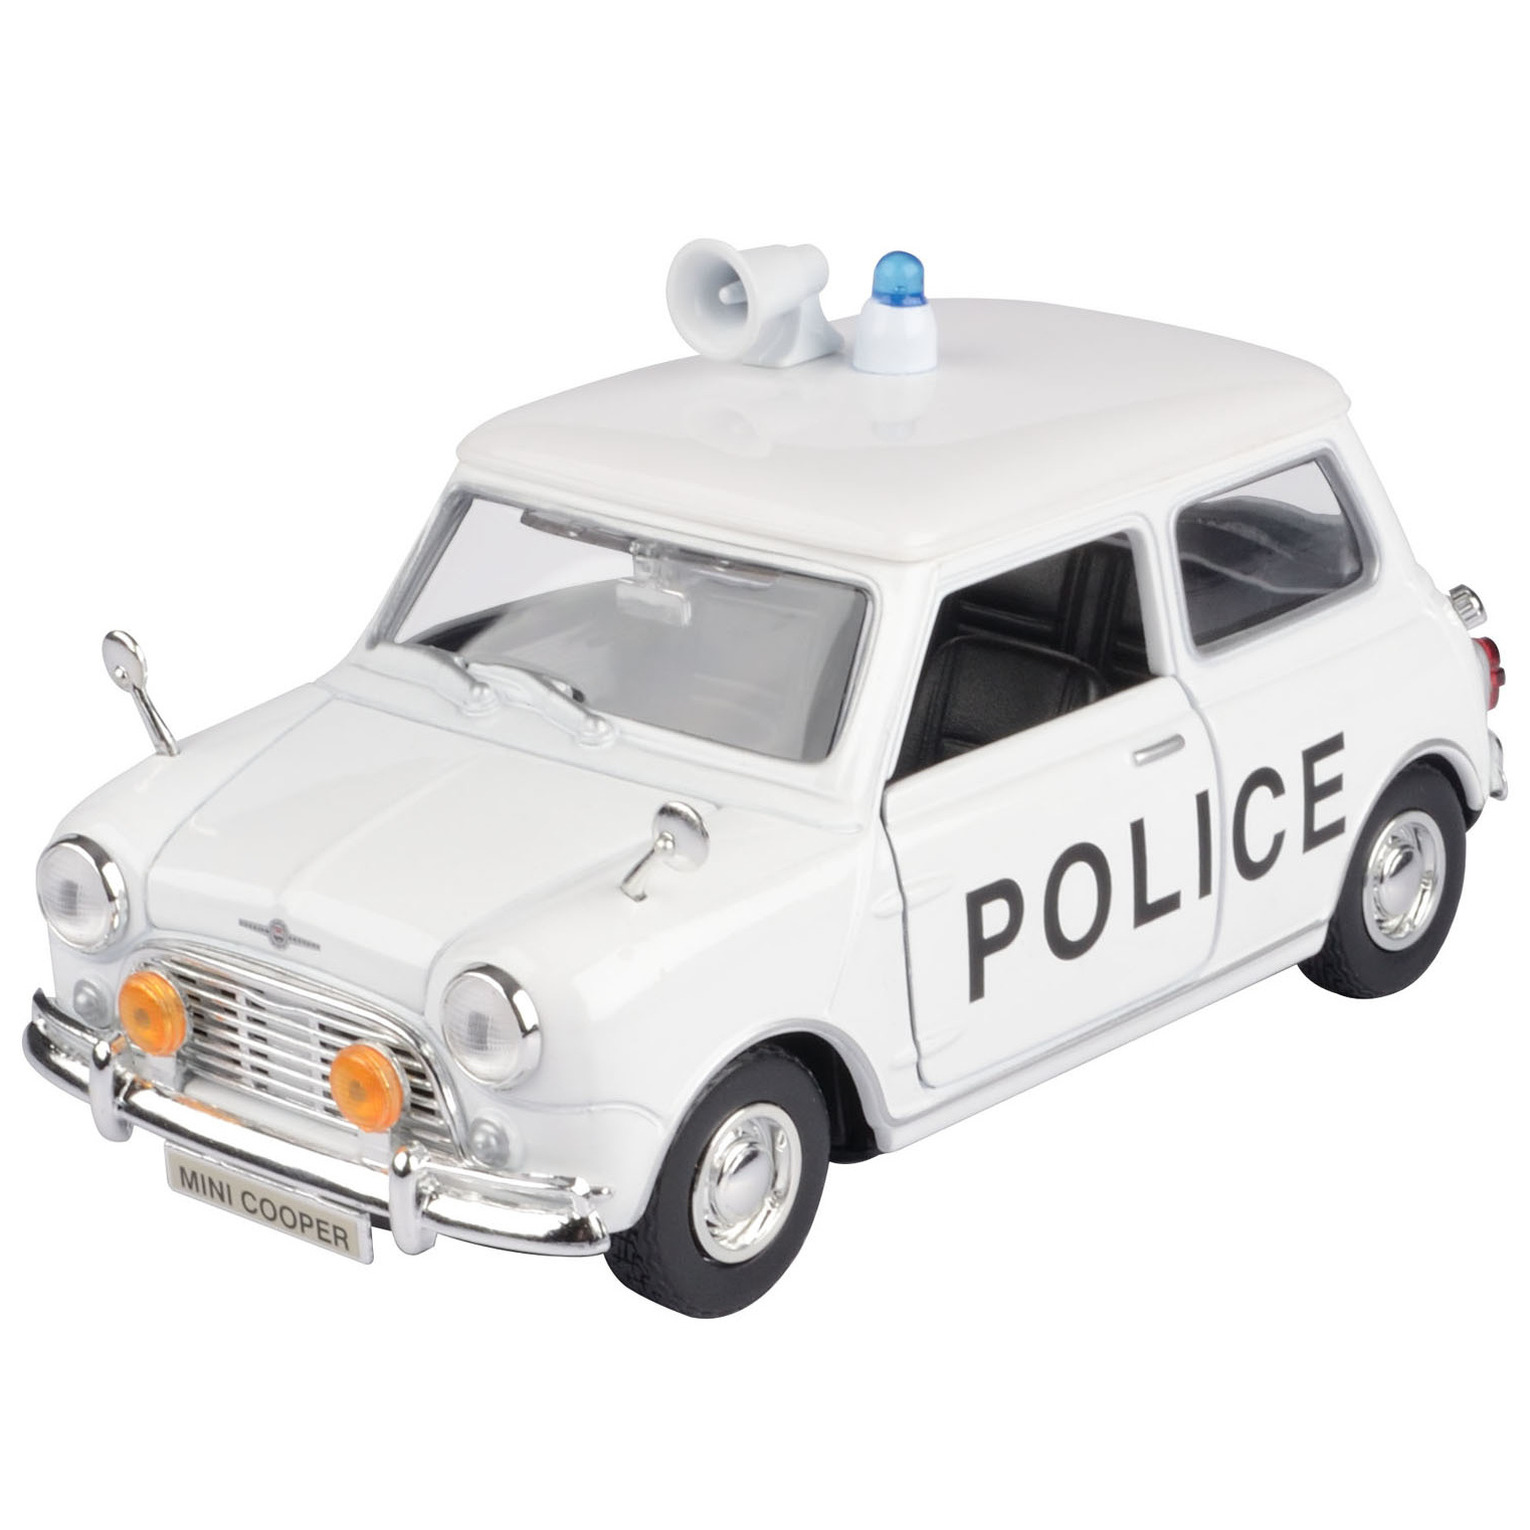 Modelauto Mini Cooper politie auto wit schaal 1:18-17 x 8 x 8 cm